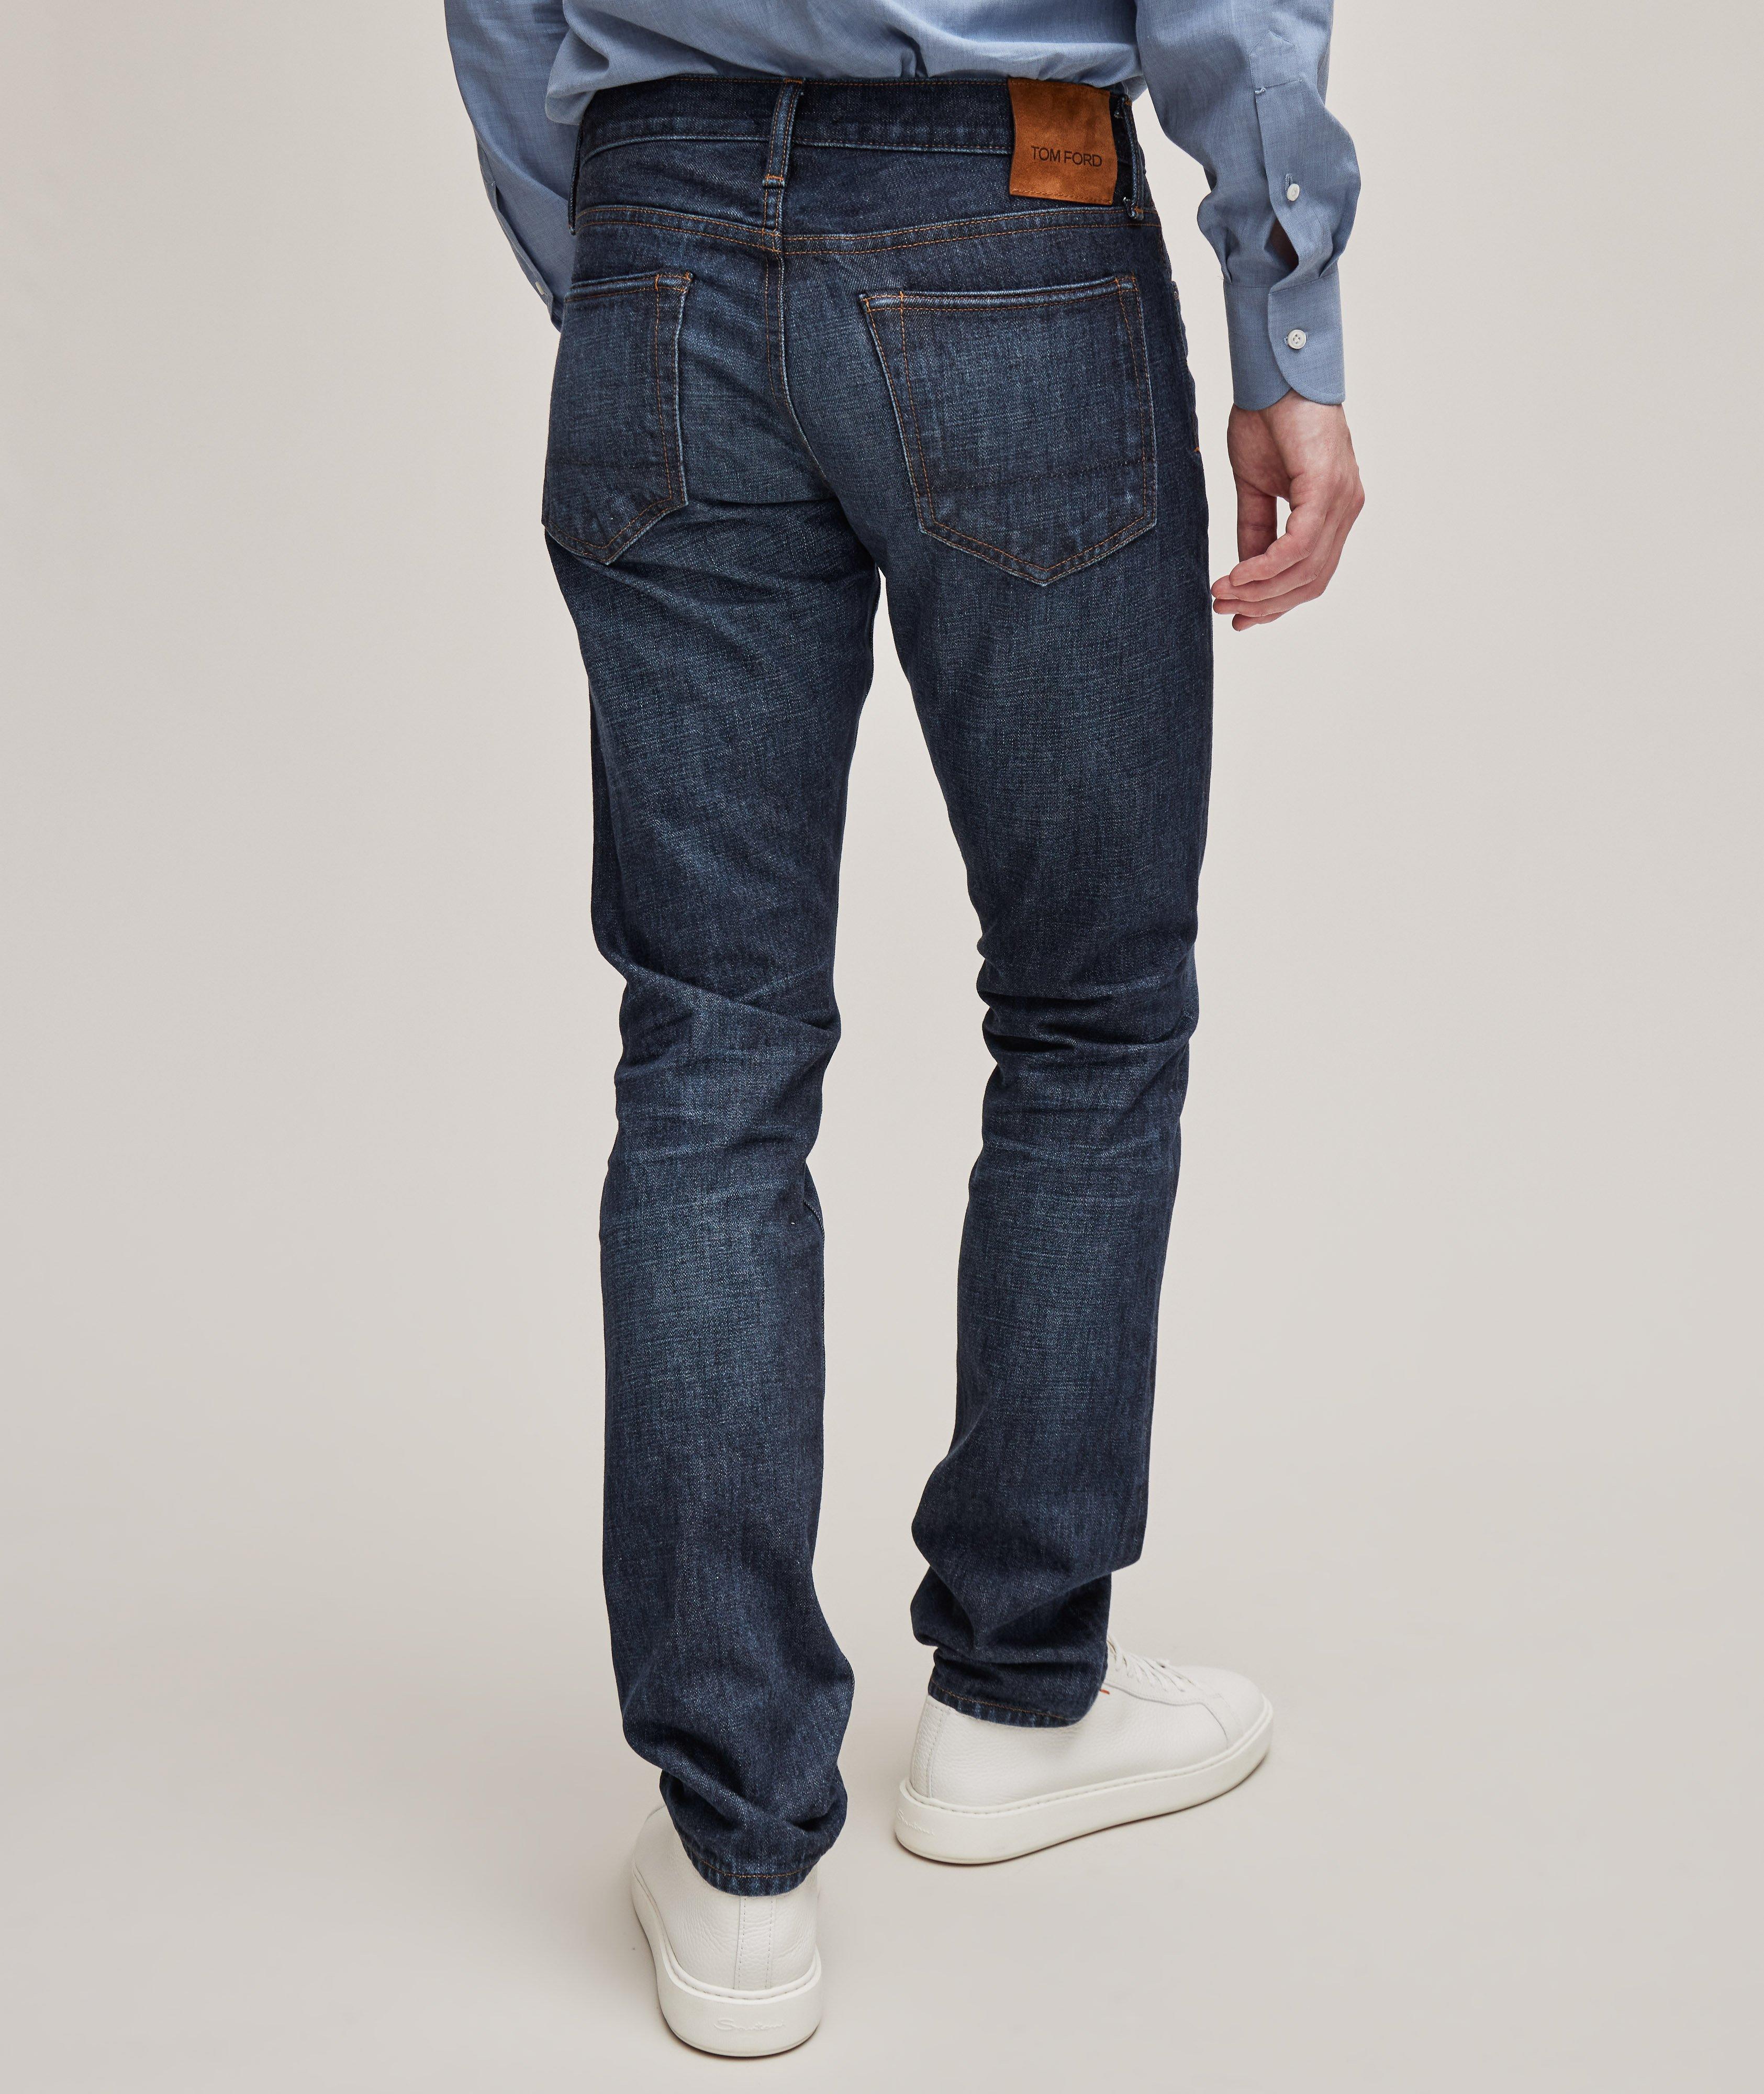 Slim-Fit Japanese Selvedge Cotton Jeans image 3